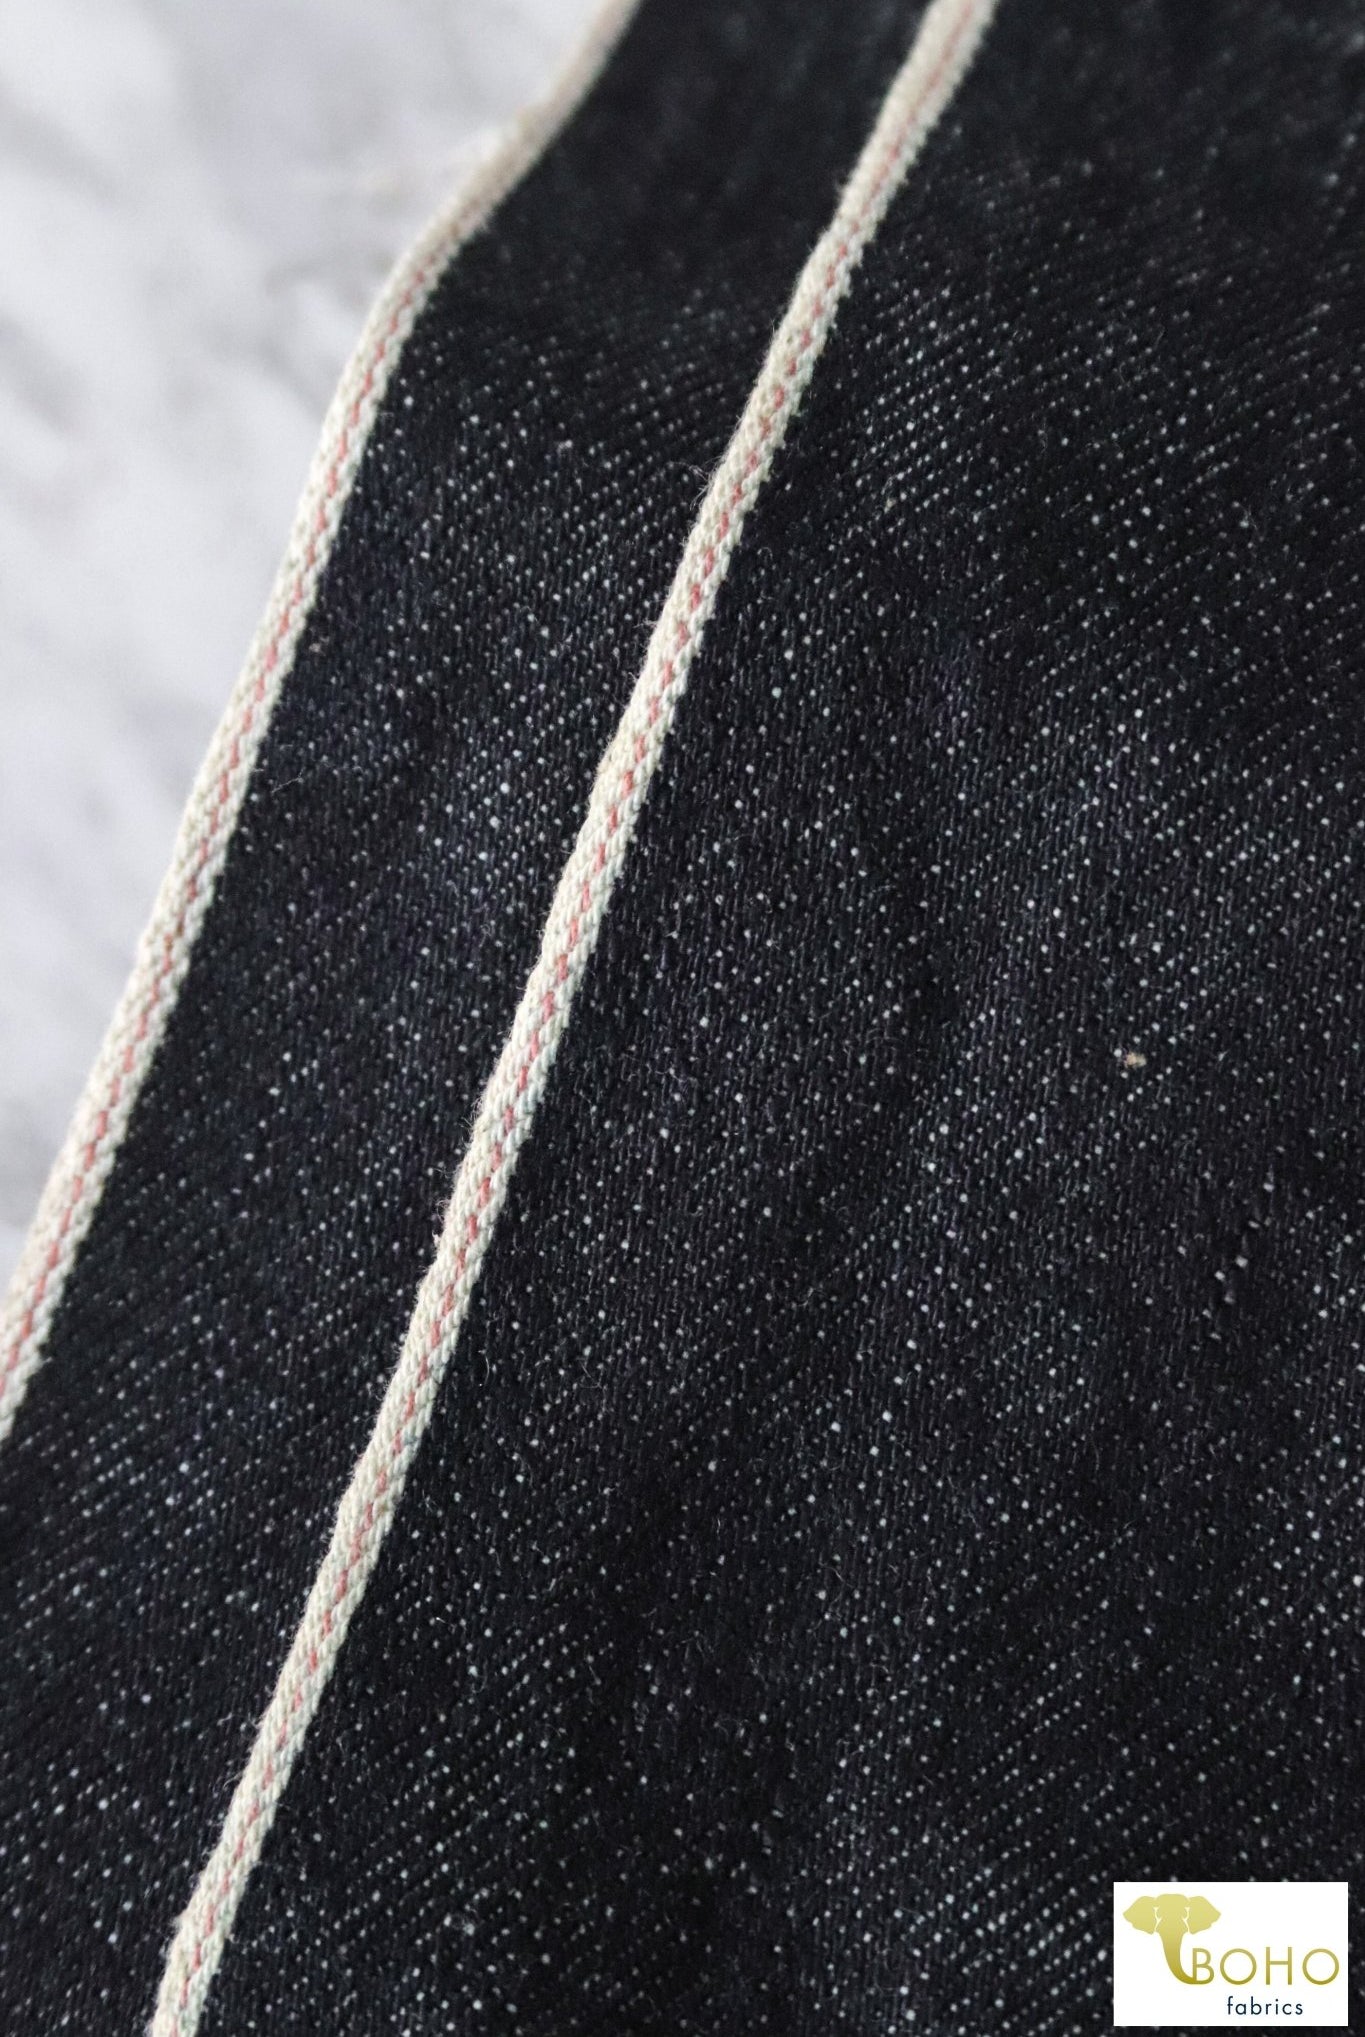 Selvedge Denim, Woven. WVS-305 - Boho Fabrics